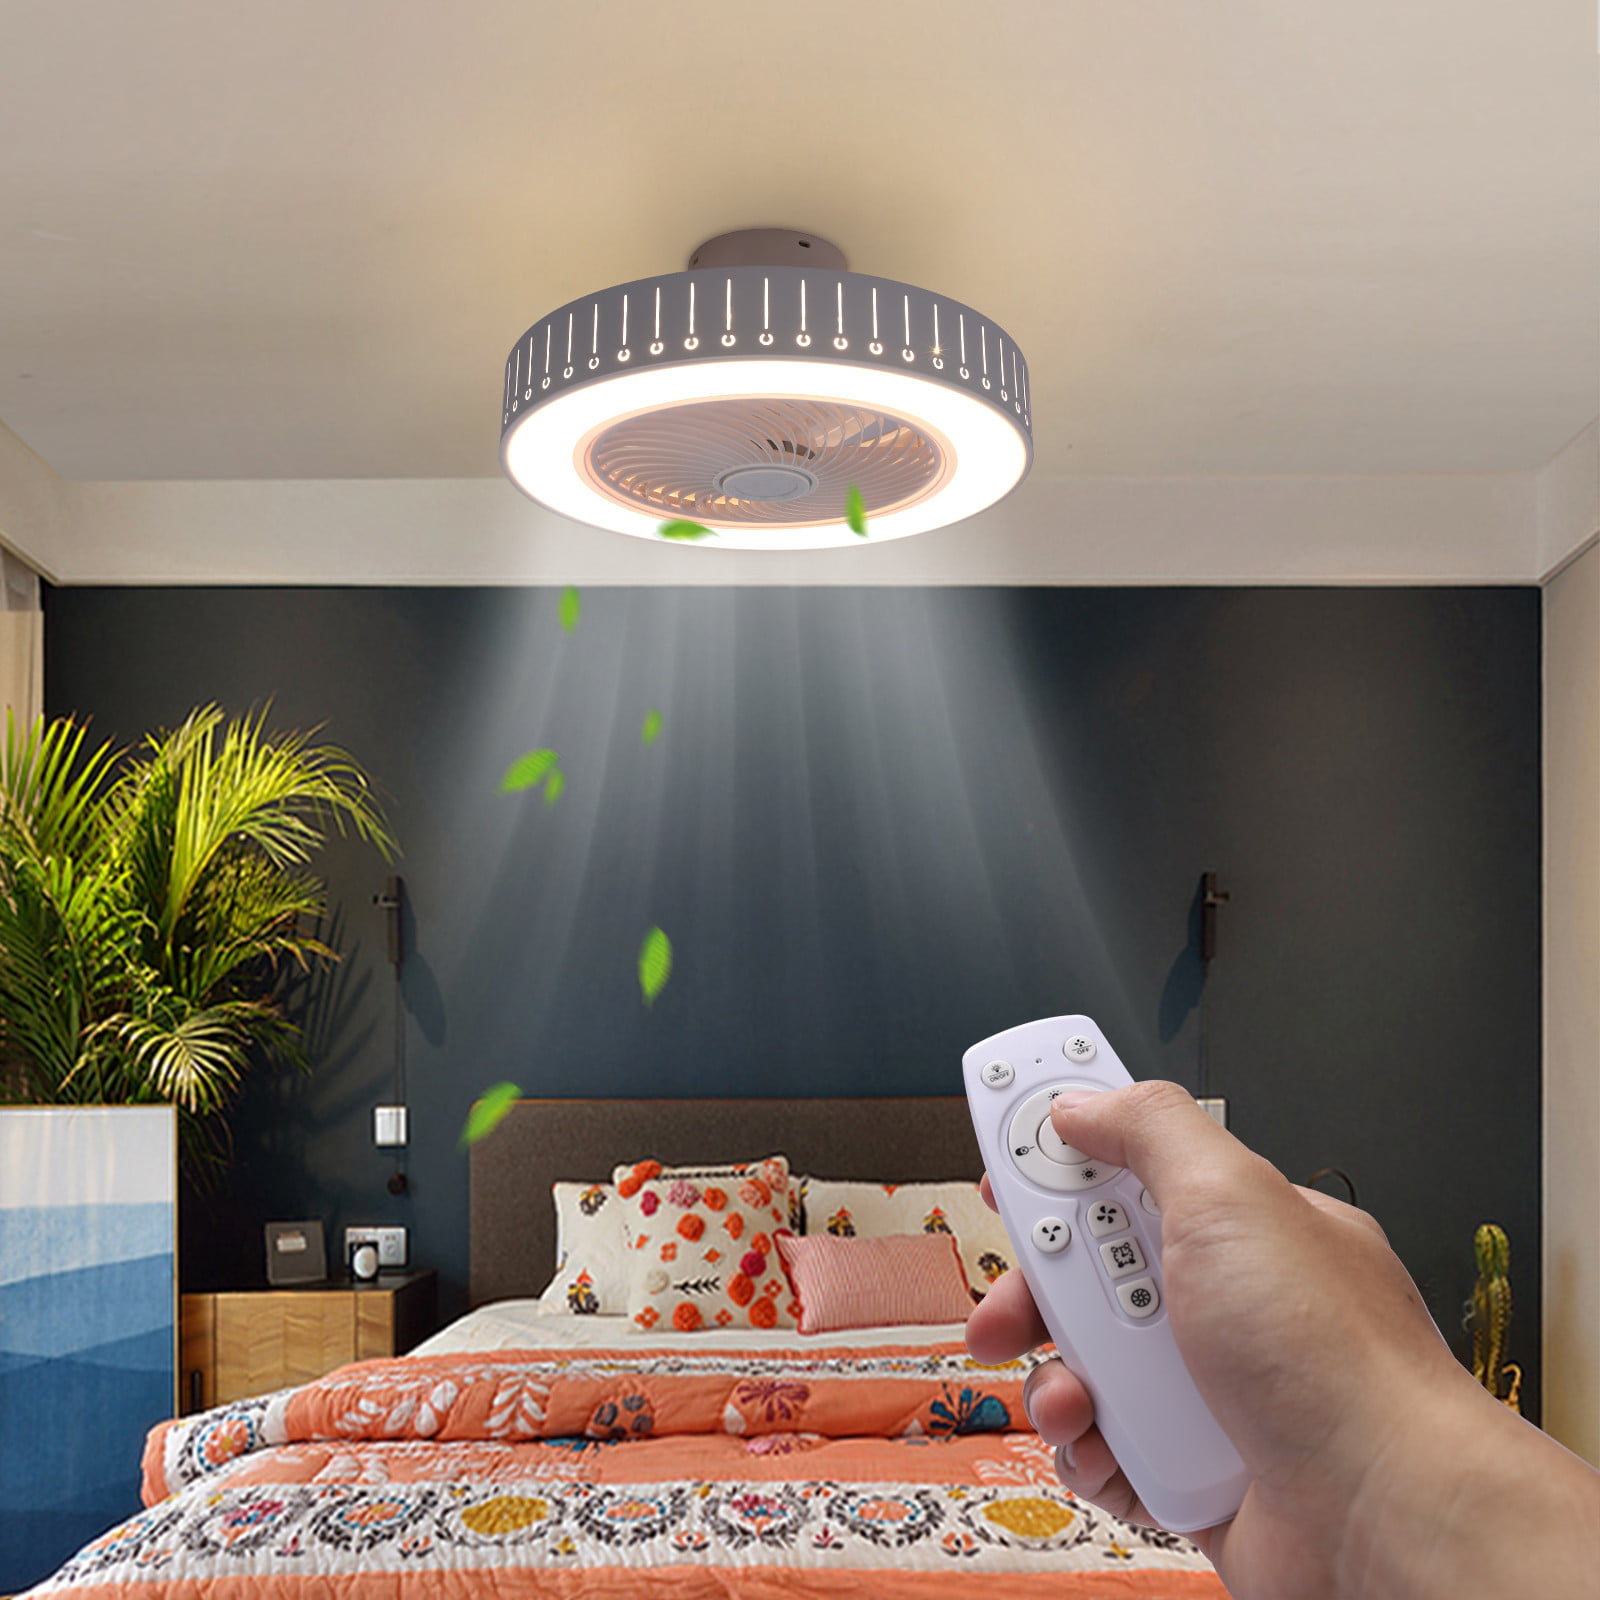 Details about   Ceiling Fan Light Remote Control LED Celling Lamp Modern Bedroom Dinning Room US 